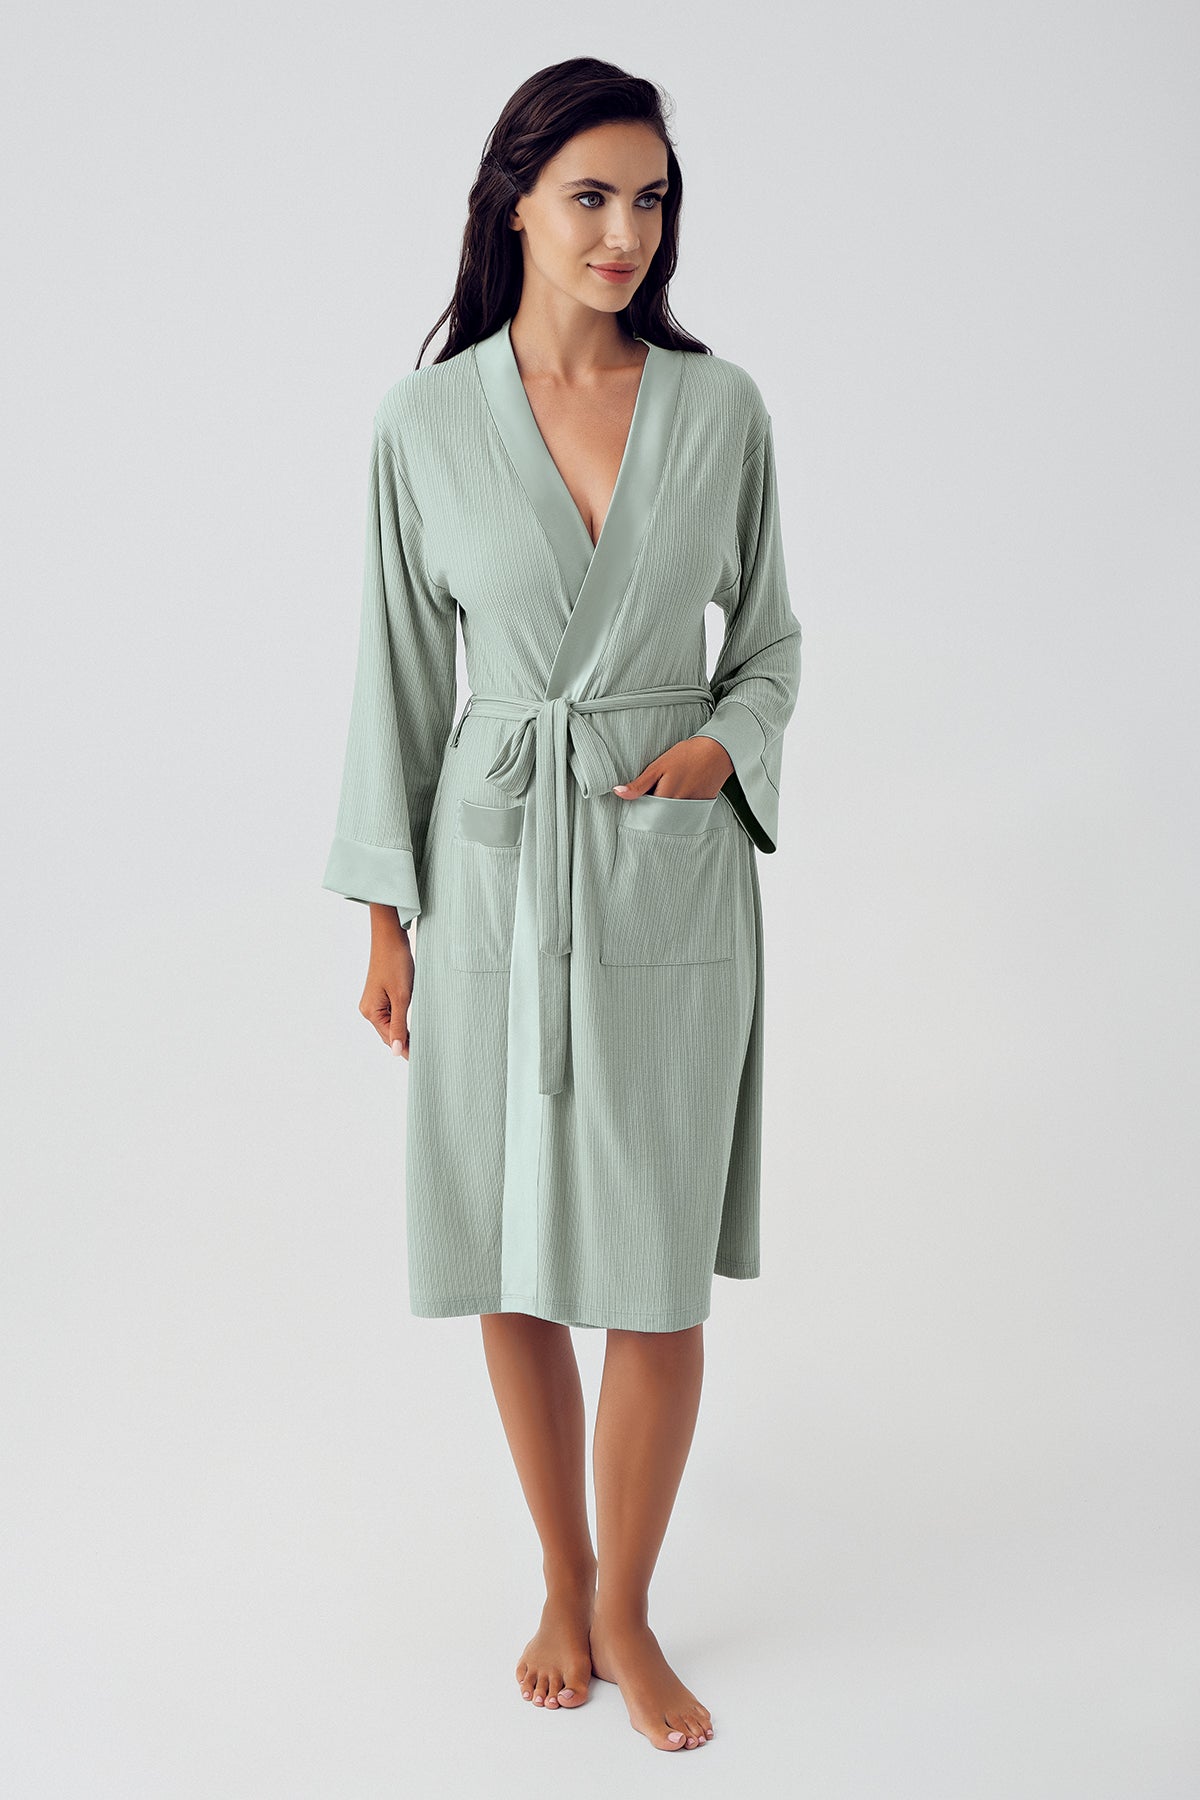 Shopymommy 15506 Bias Detailed Maternity Robe Green